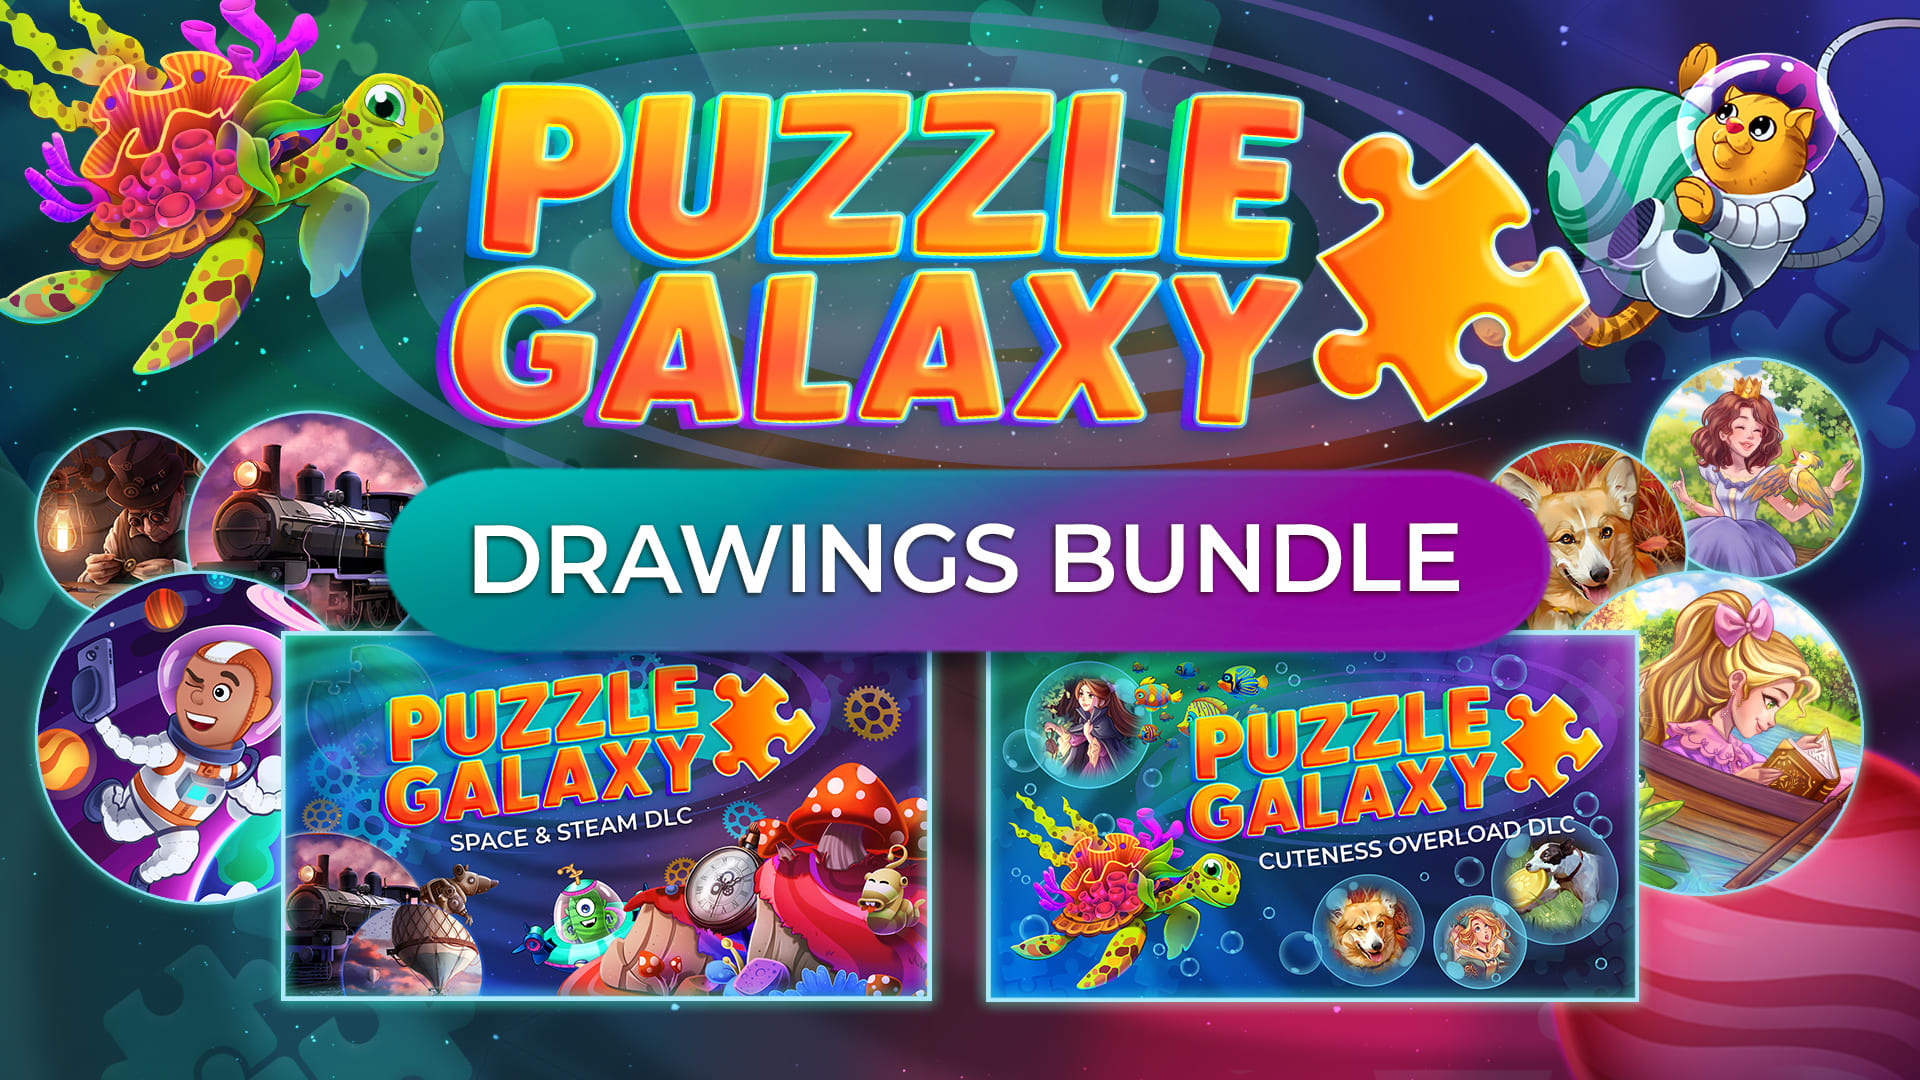 Puzzle Galaxy: Drawings Bundle - 50 puzzles